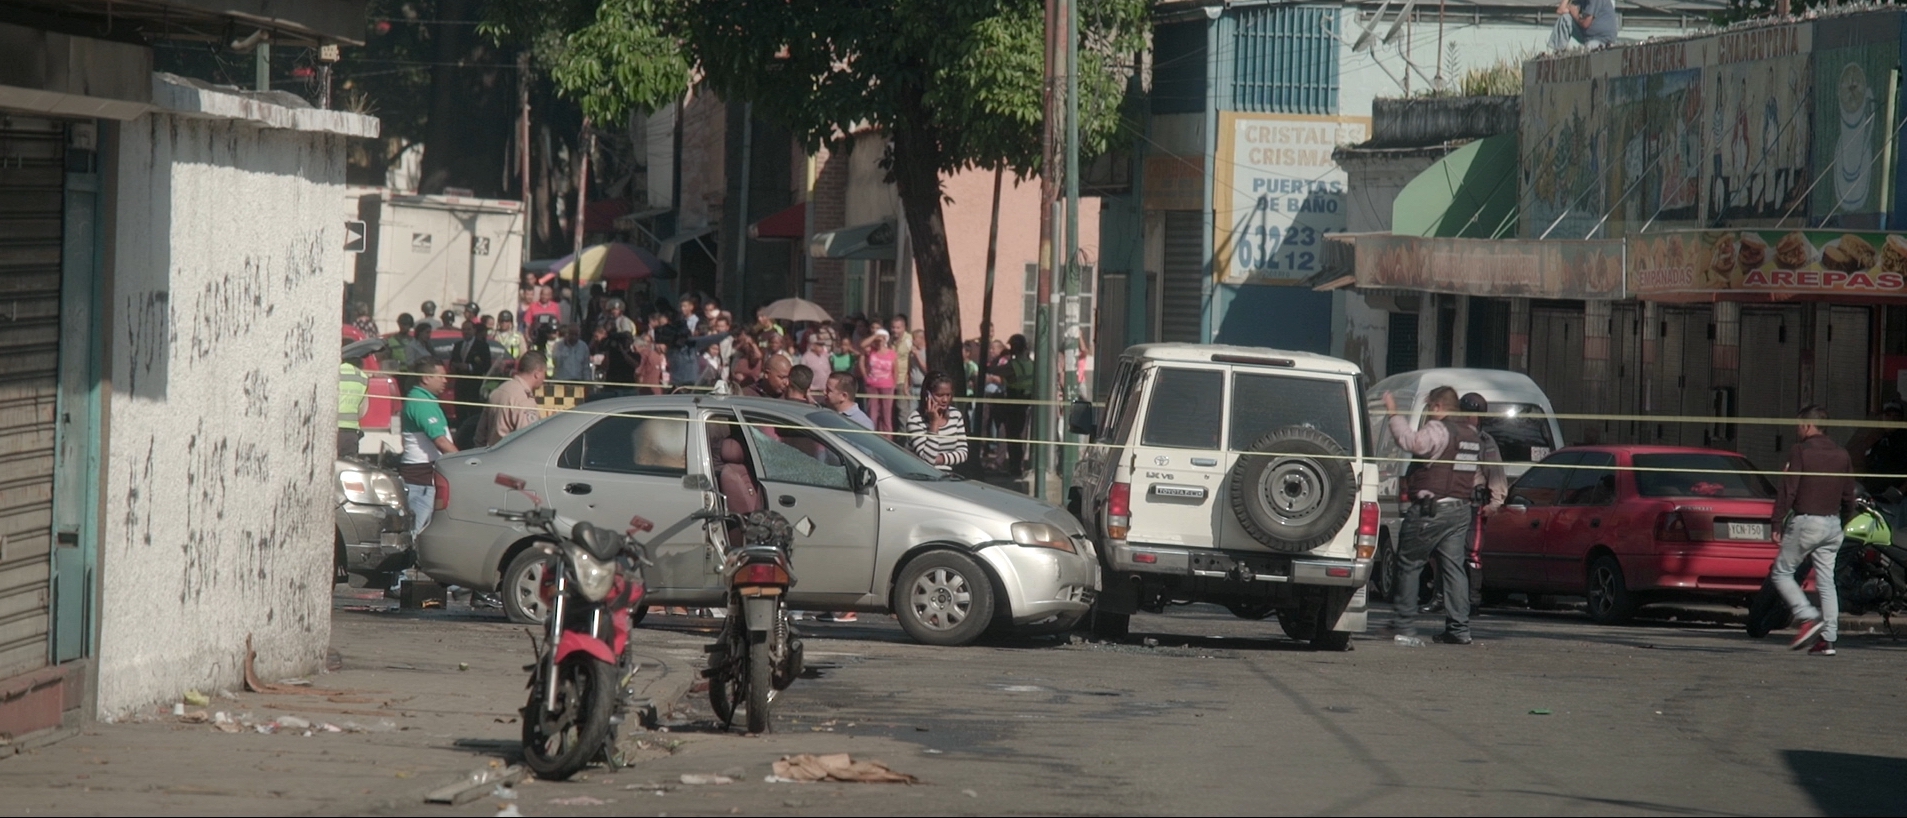 LA RANçON 20 - Caracas, Vénézuela, fusillade après une tentative de kidnapping -(c) Little Big Story